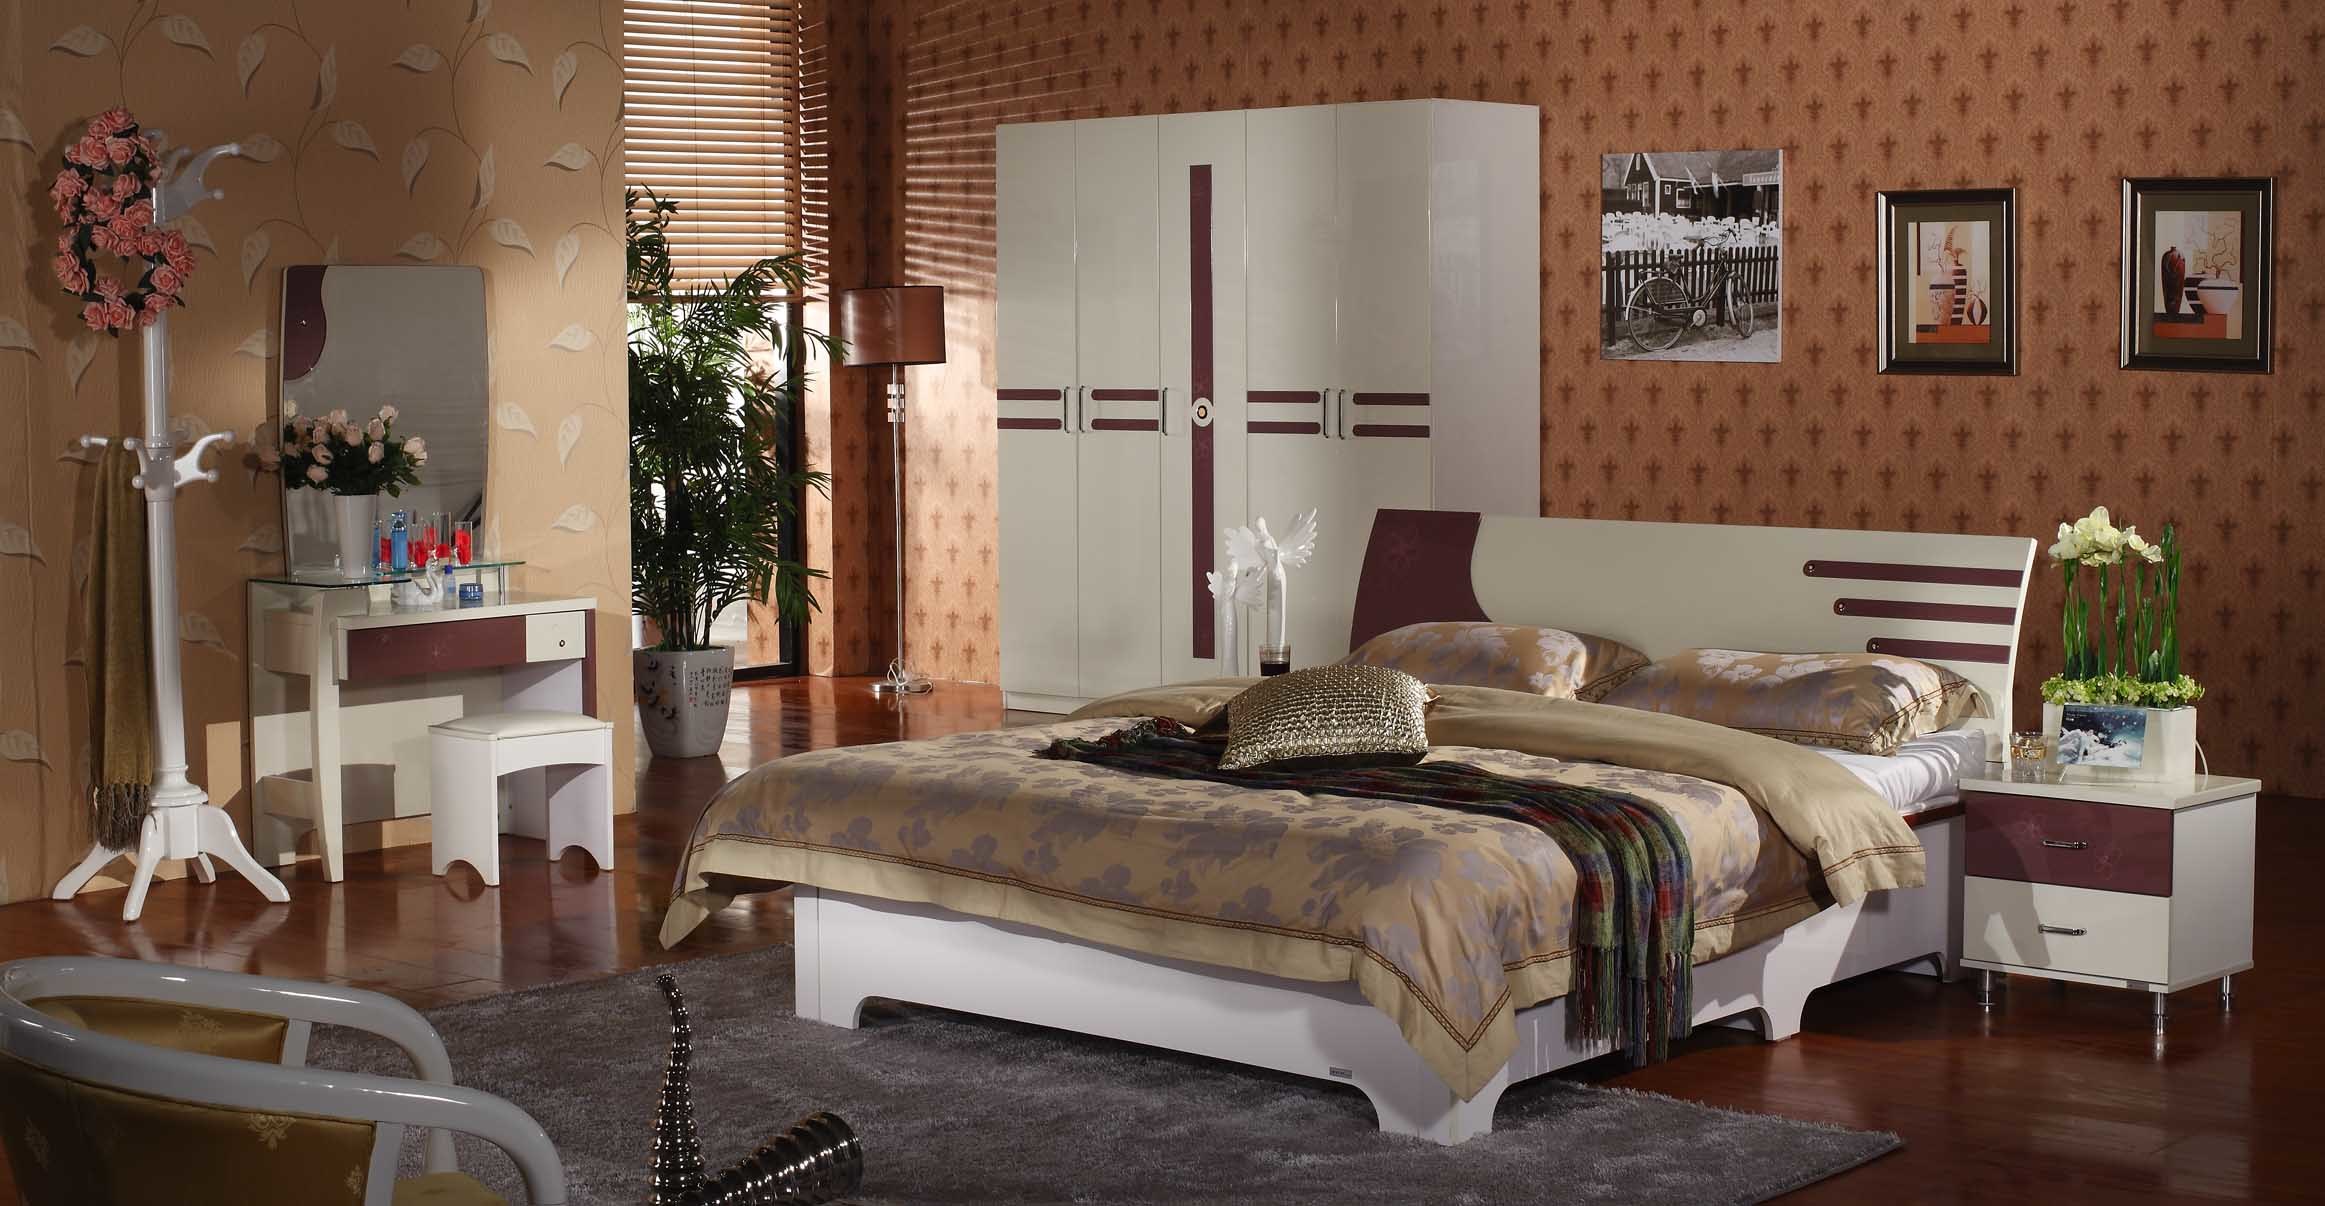 Bedroom Furniture (8039)